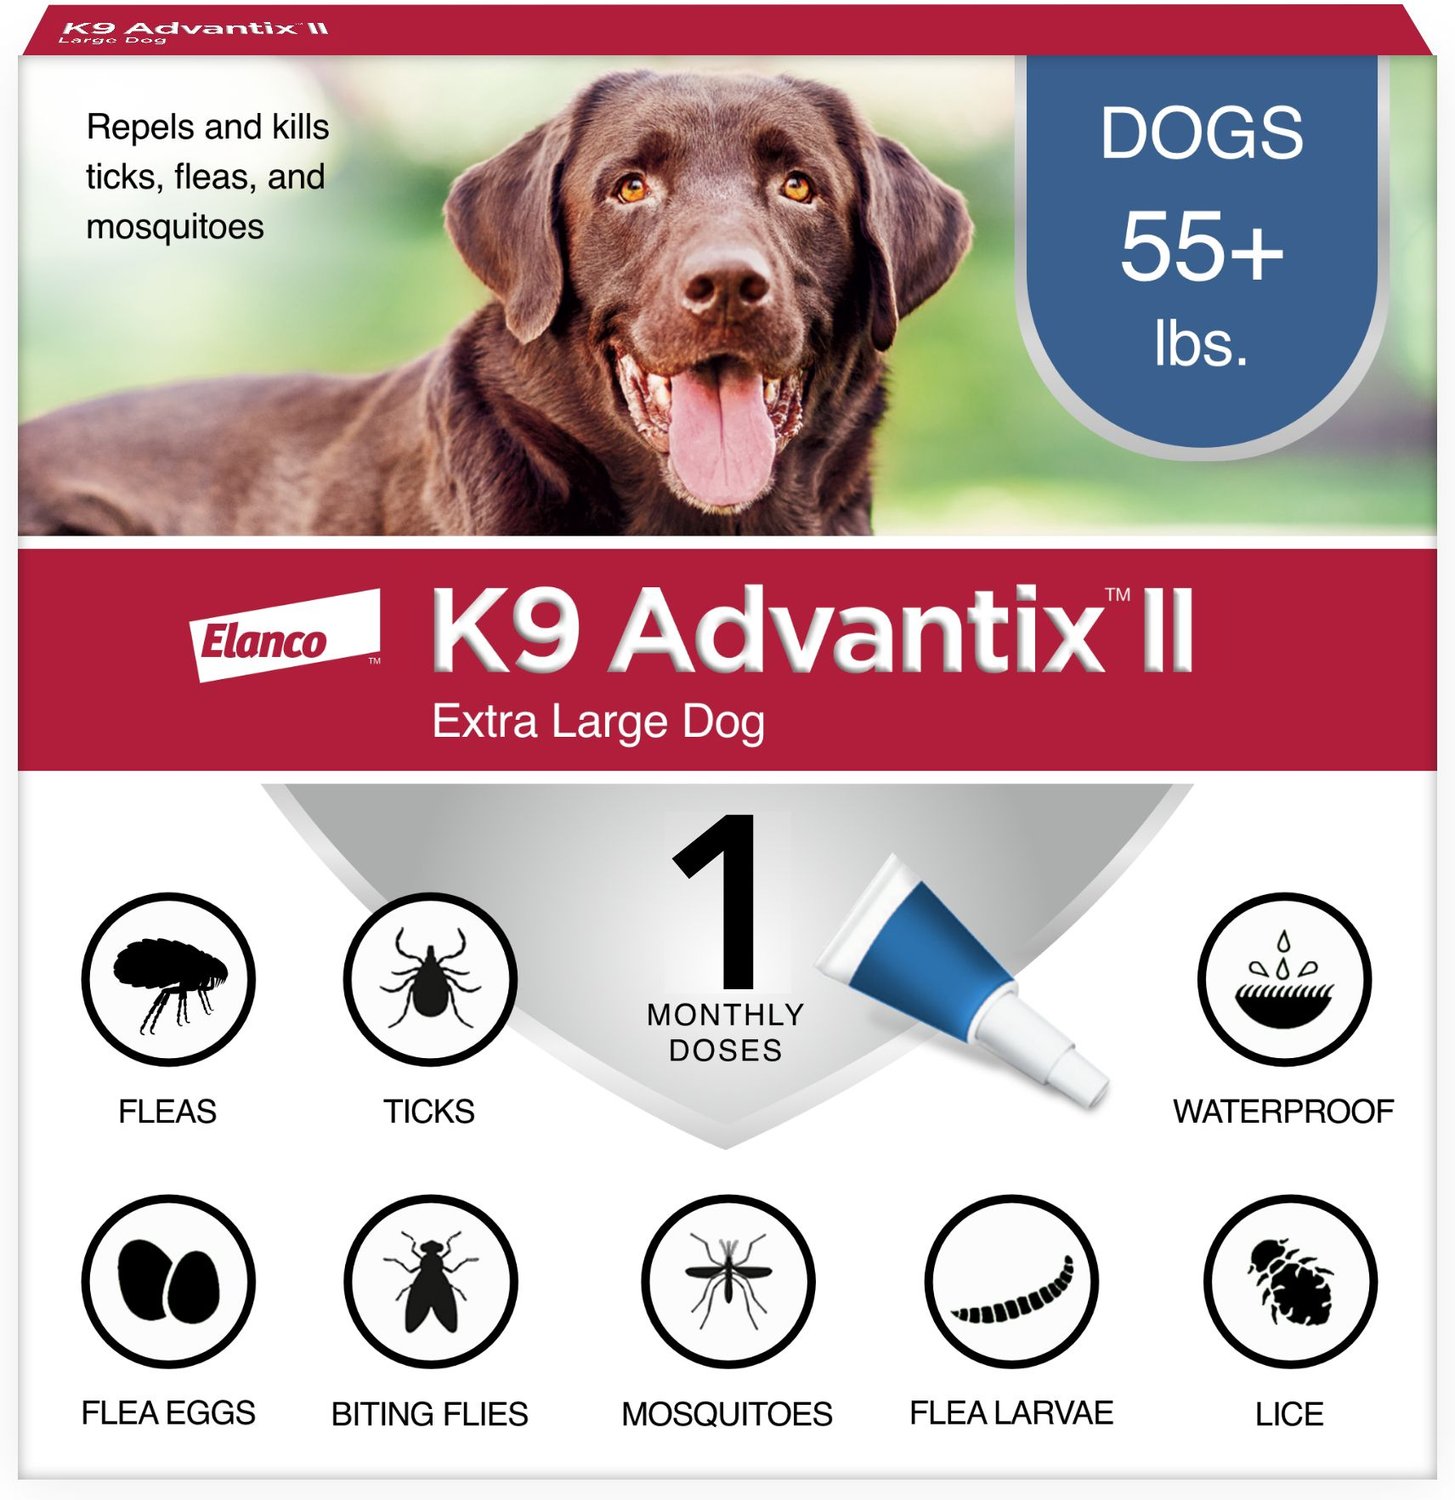 k9-advantix-ii-flea-tick-mosquito-prevention-for-extra-large-dogs